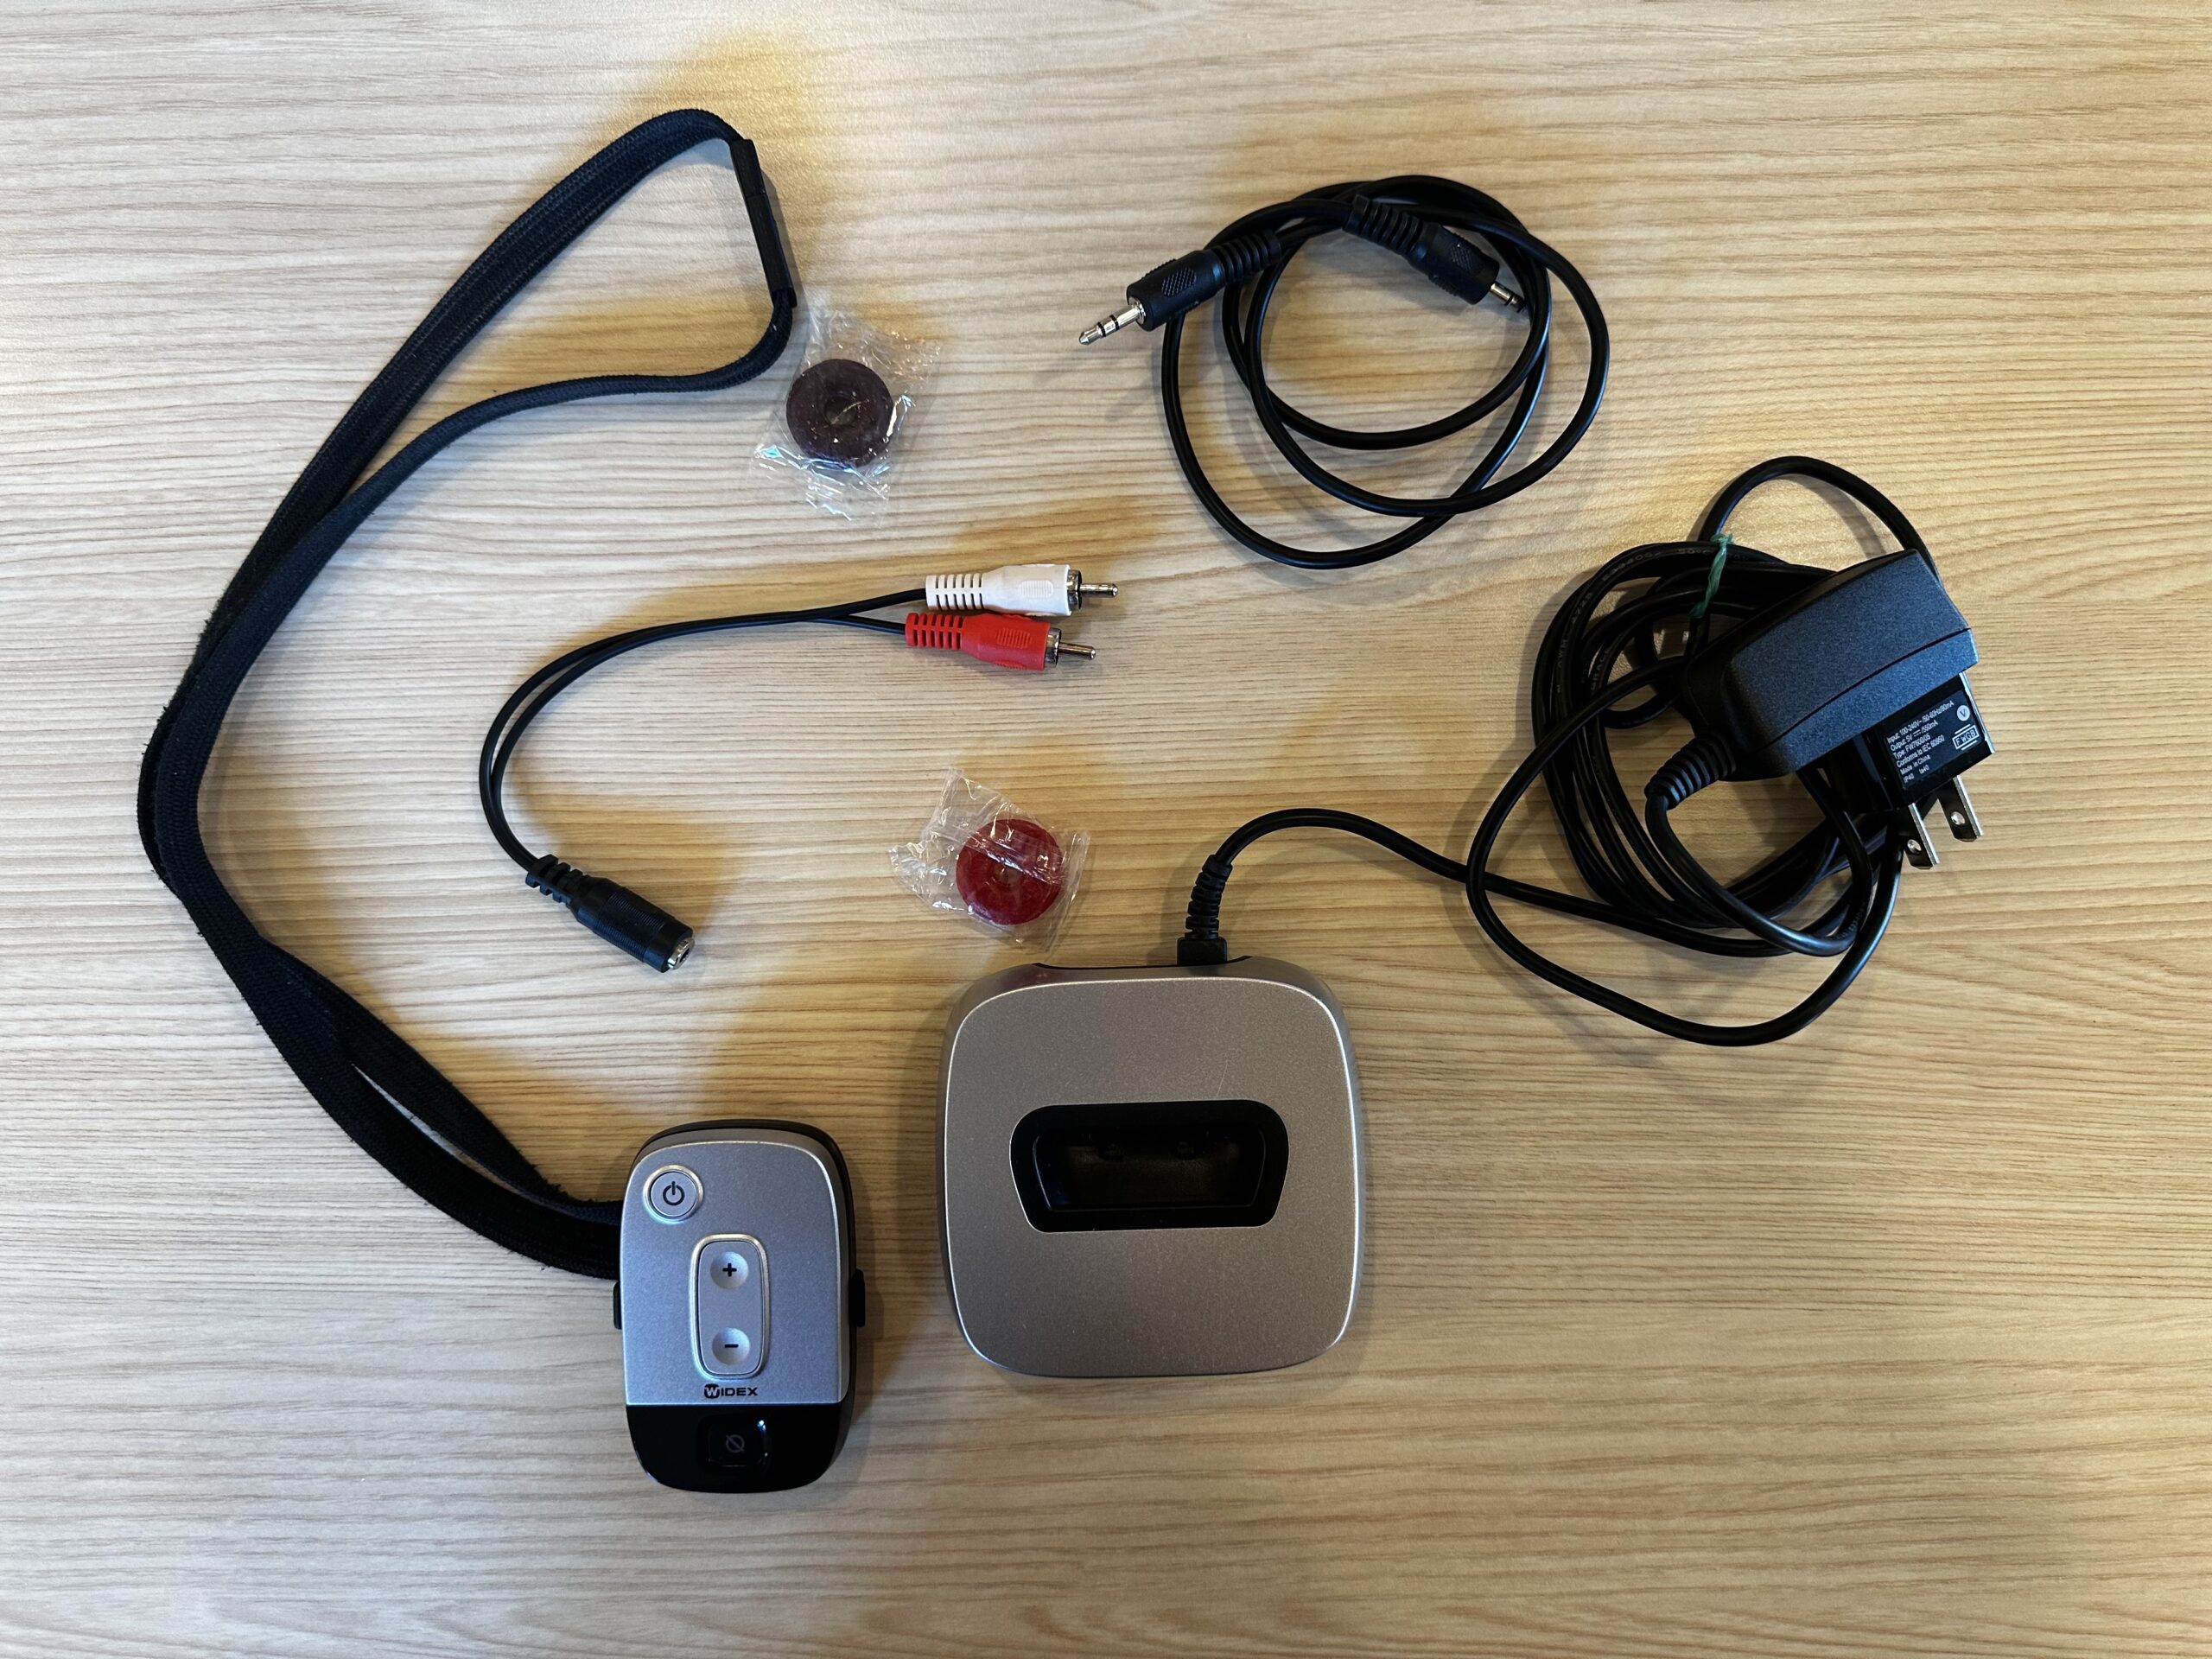 Hearing aid accessory